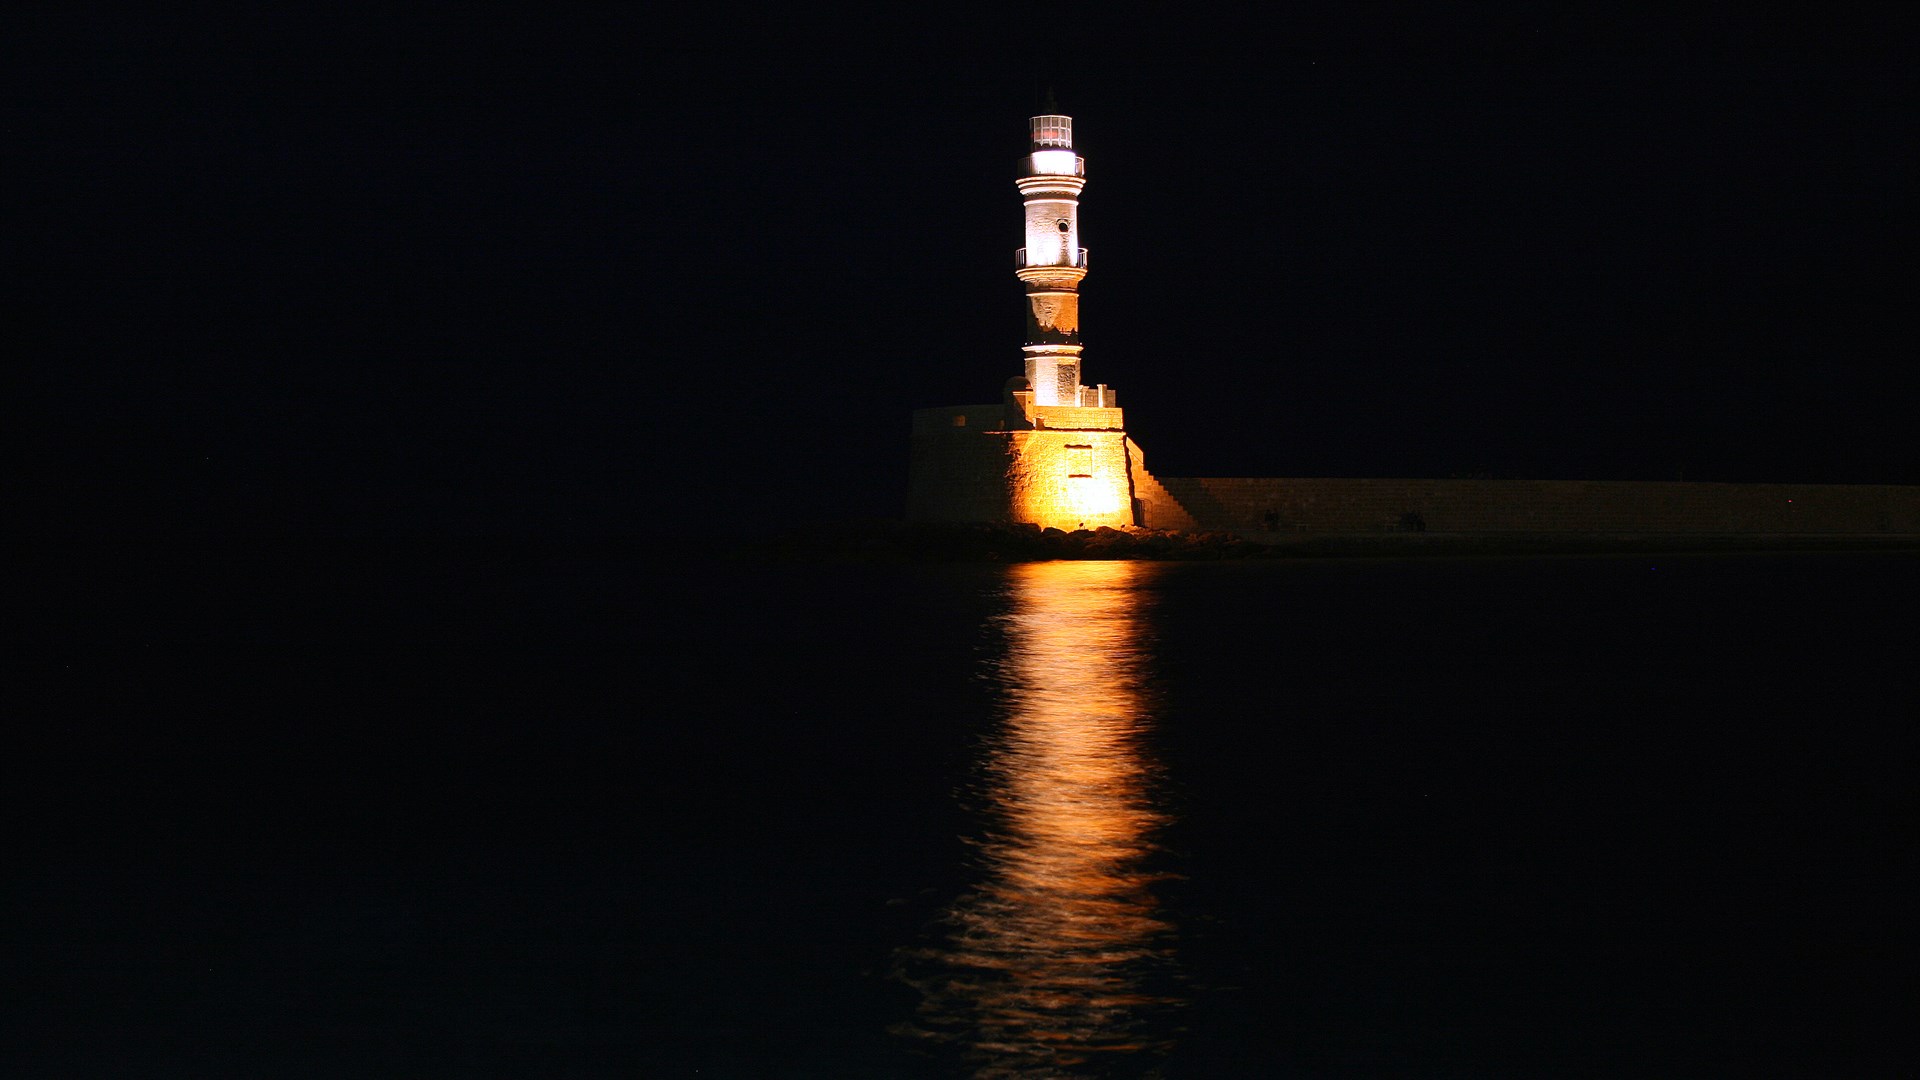 The Lighthouse, Chania - Crete | 01 Aug 2014  | Alargo